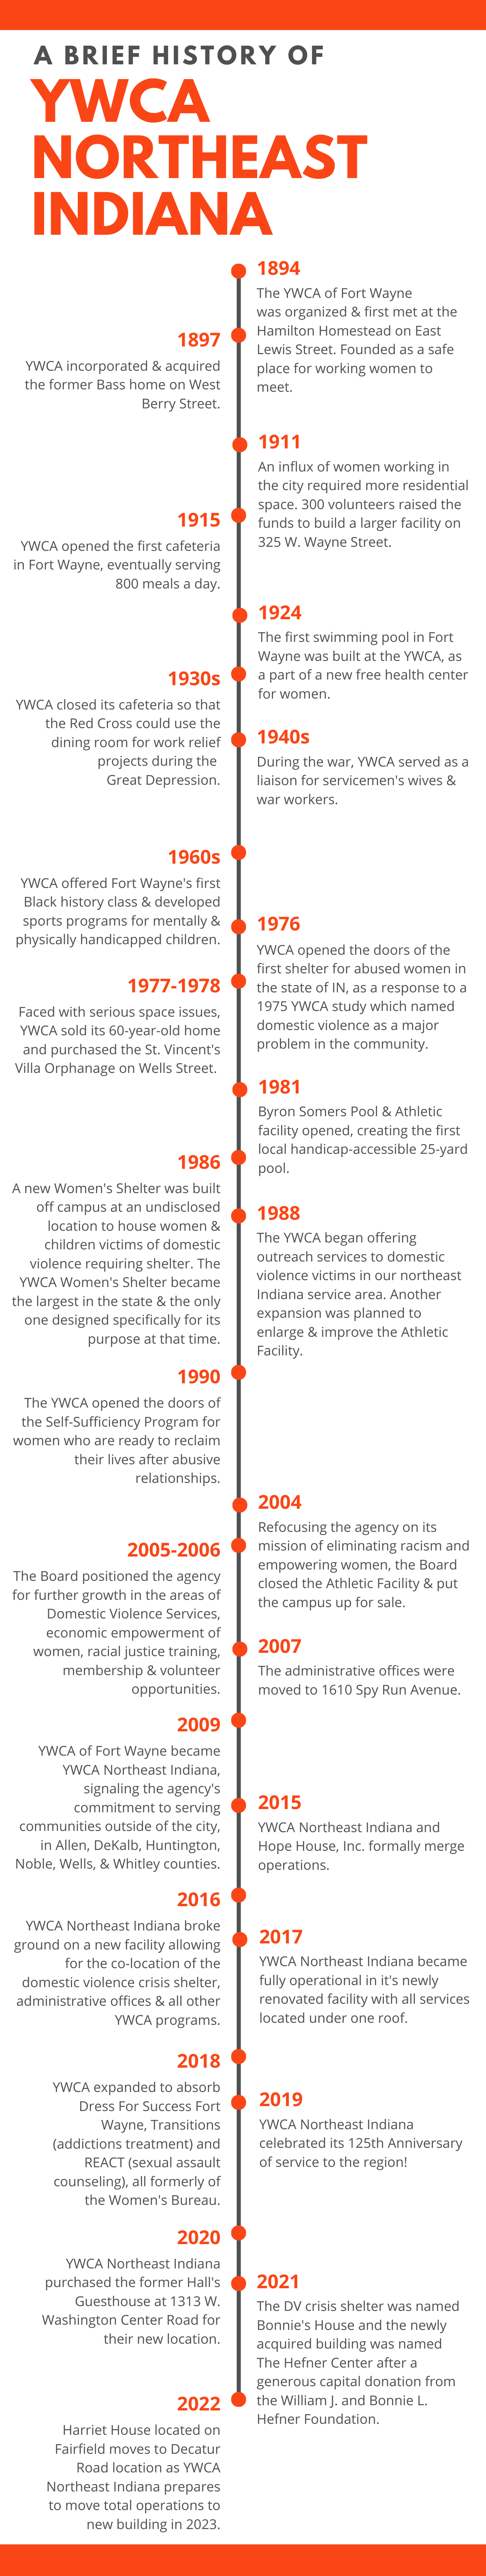 YWCA Northeast Indiana timeline